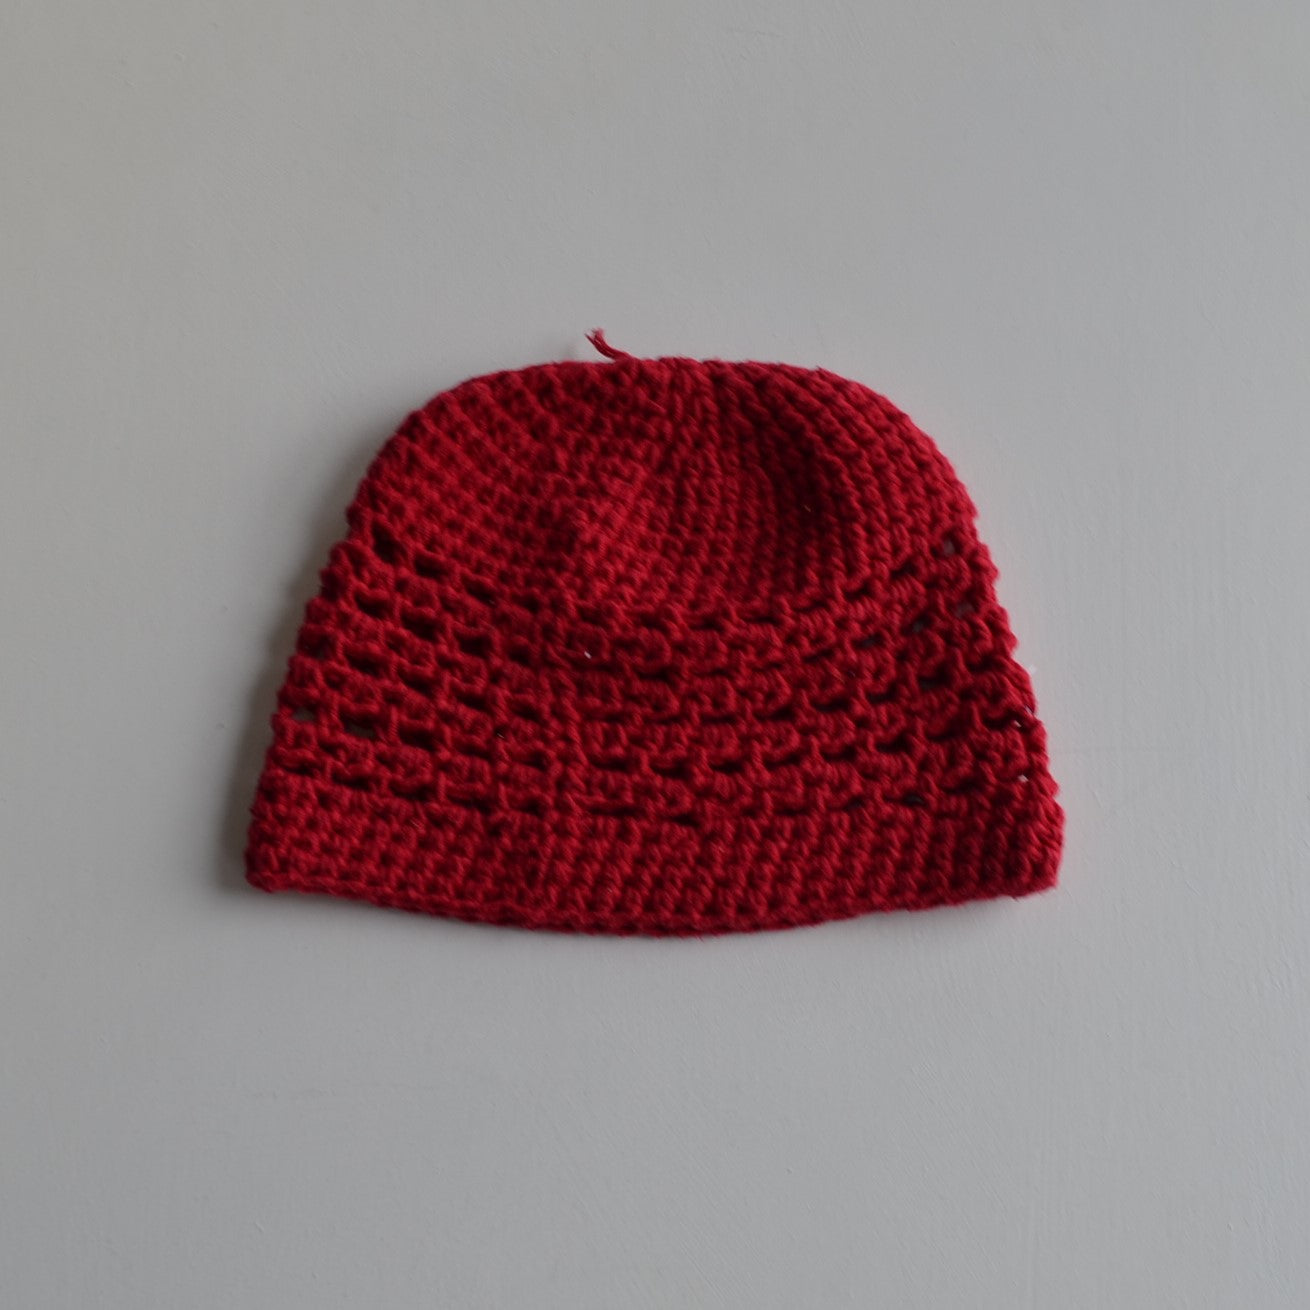 Knitted Burgundy Beanie Hat